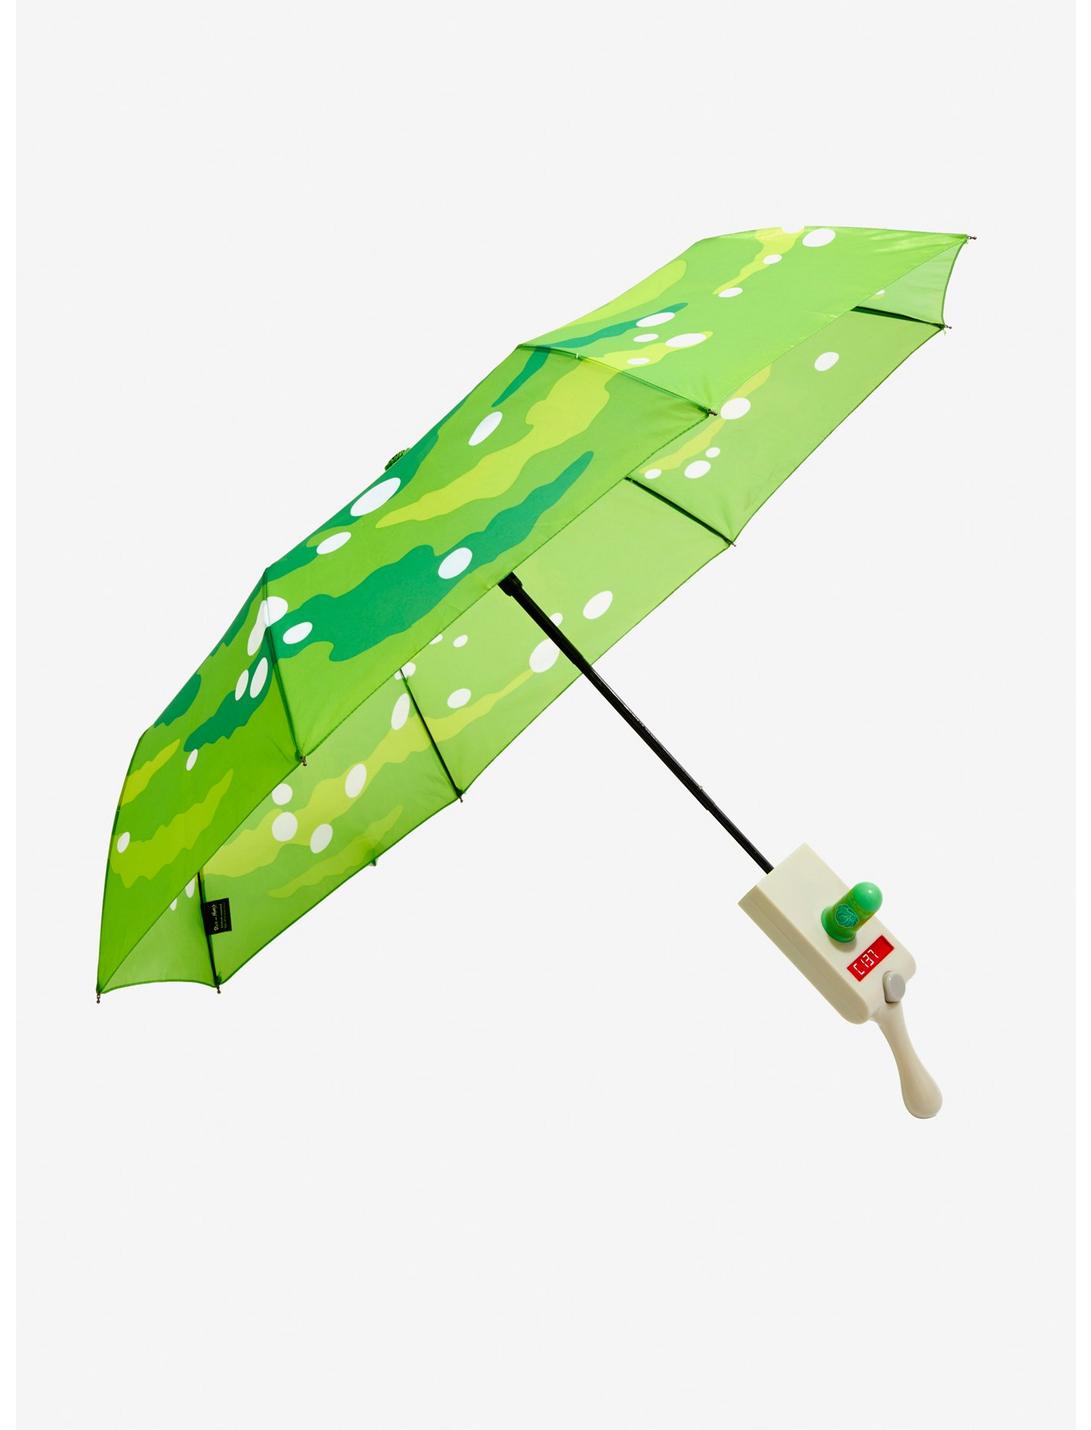 Rick And Morty TV Animation umbrella Home Rain Cover Protection